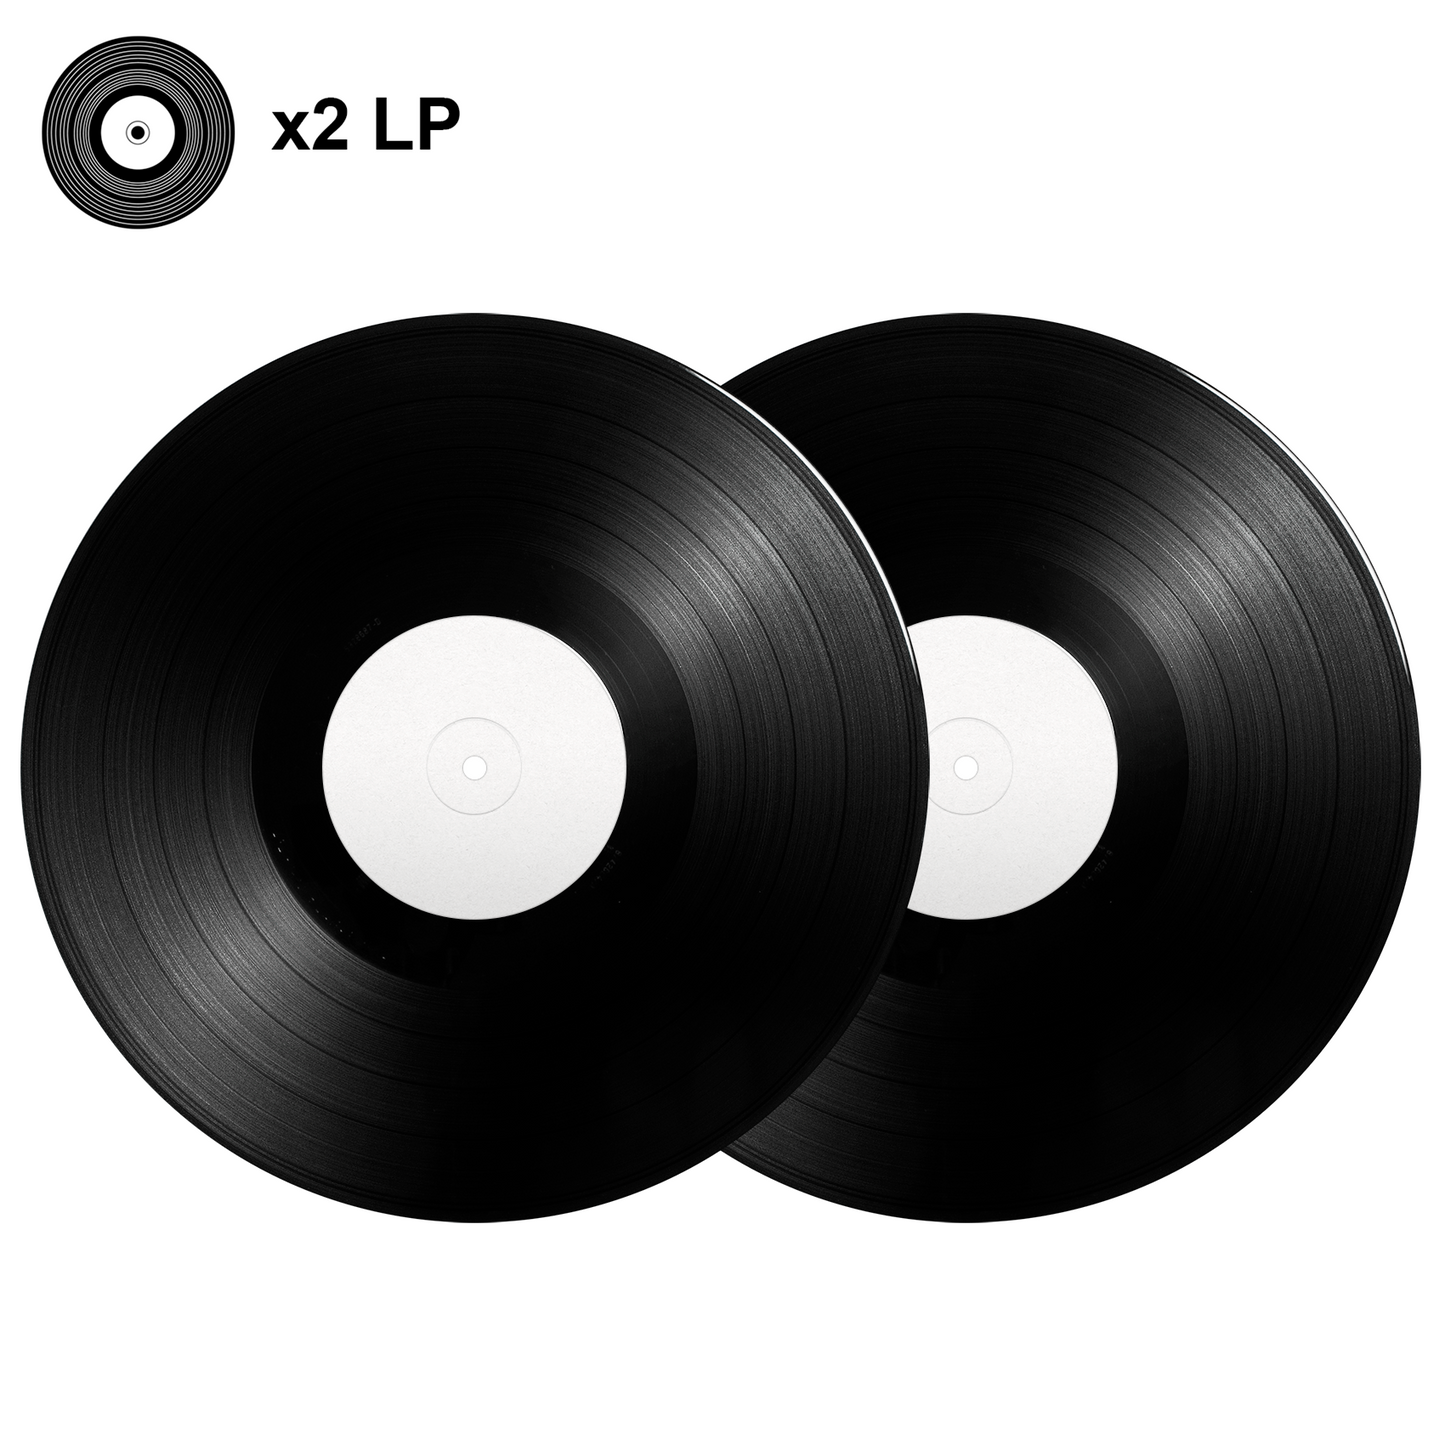 VentureX - "Together" Test Pressing Vinyl 2LP